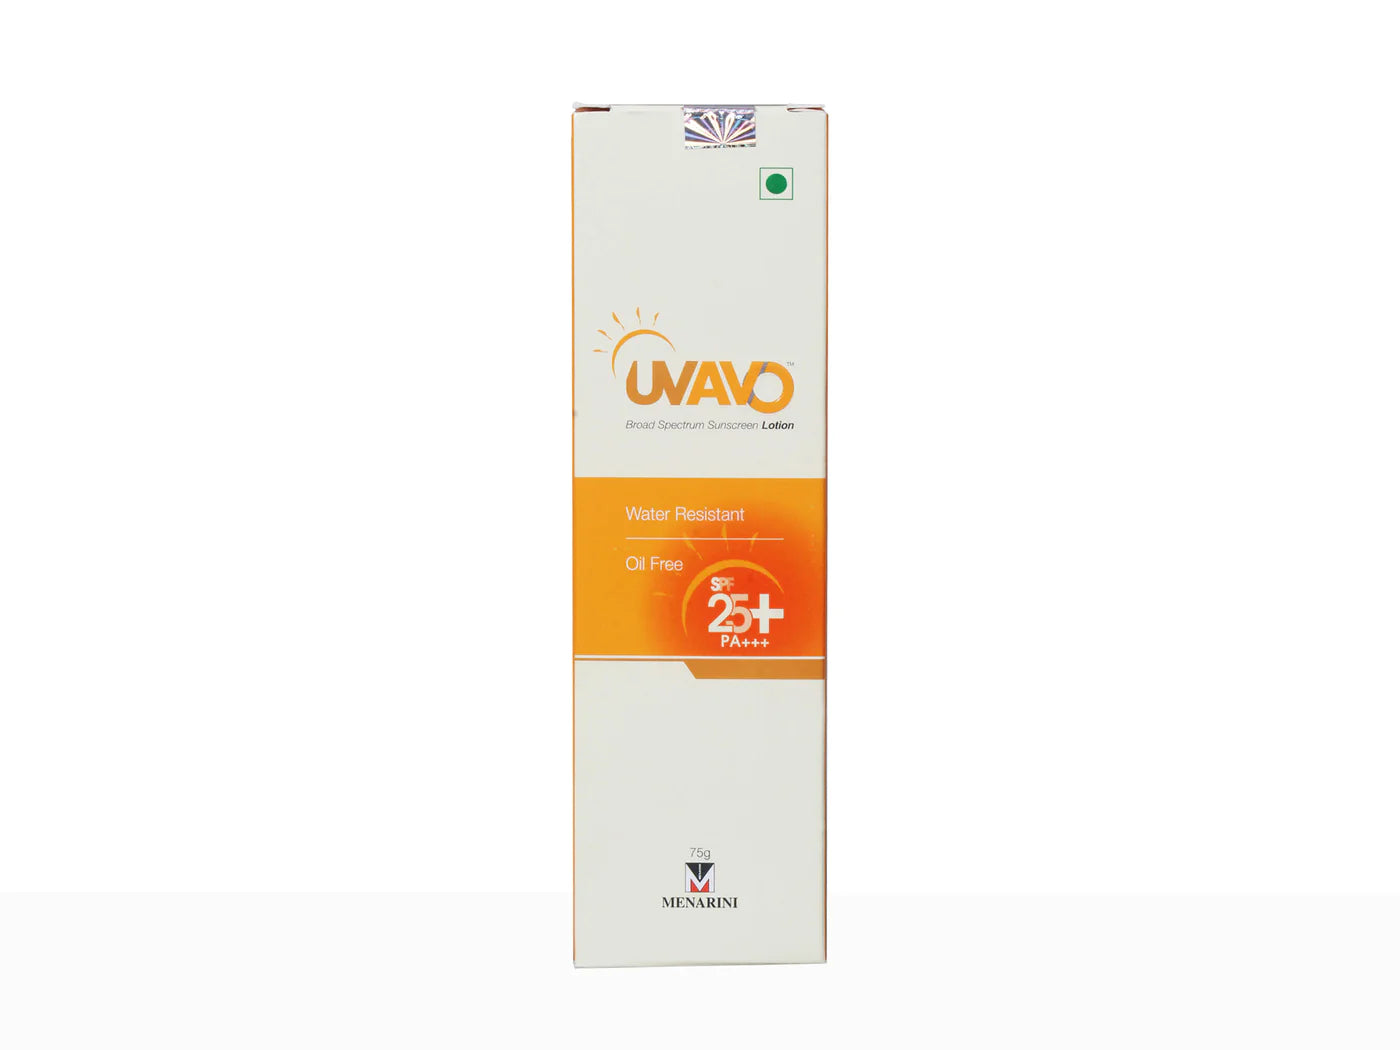 UVAVO SPF 25+ Sunscreen Lotion (75g)